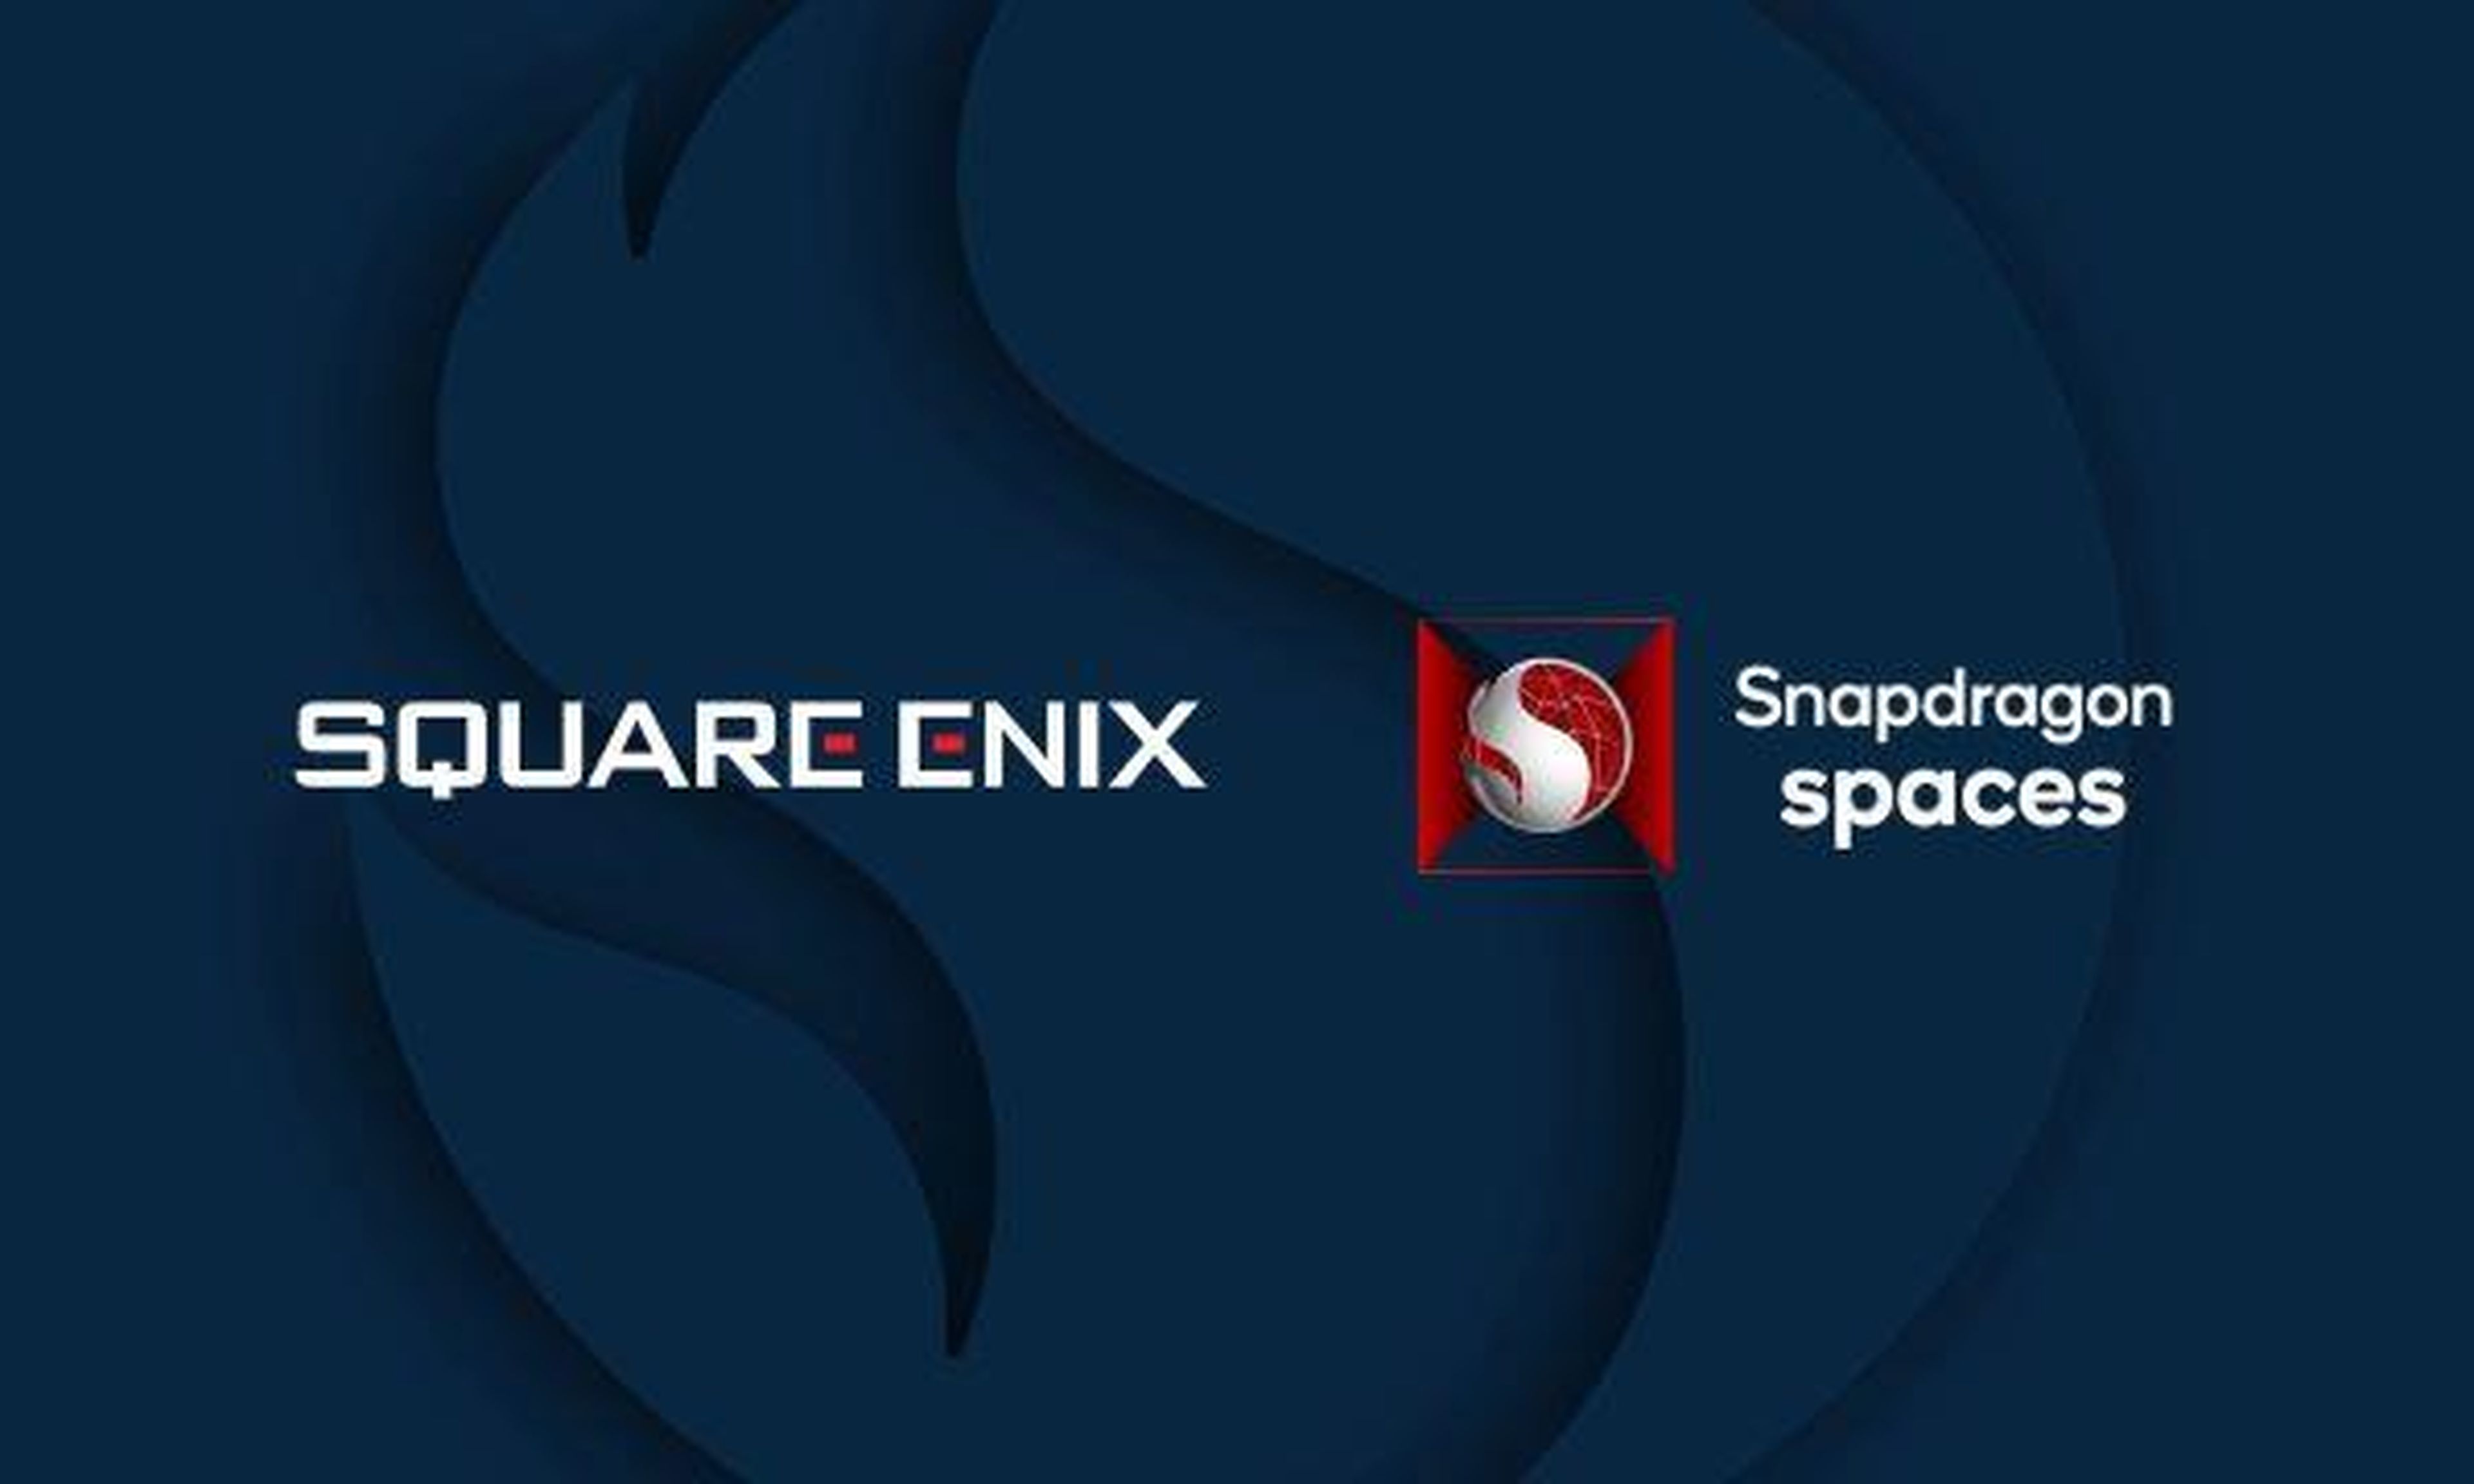 Square Enix Snapdragon